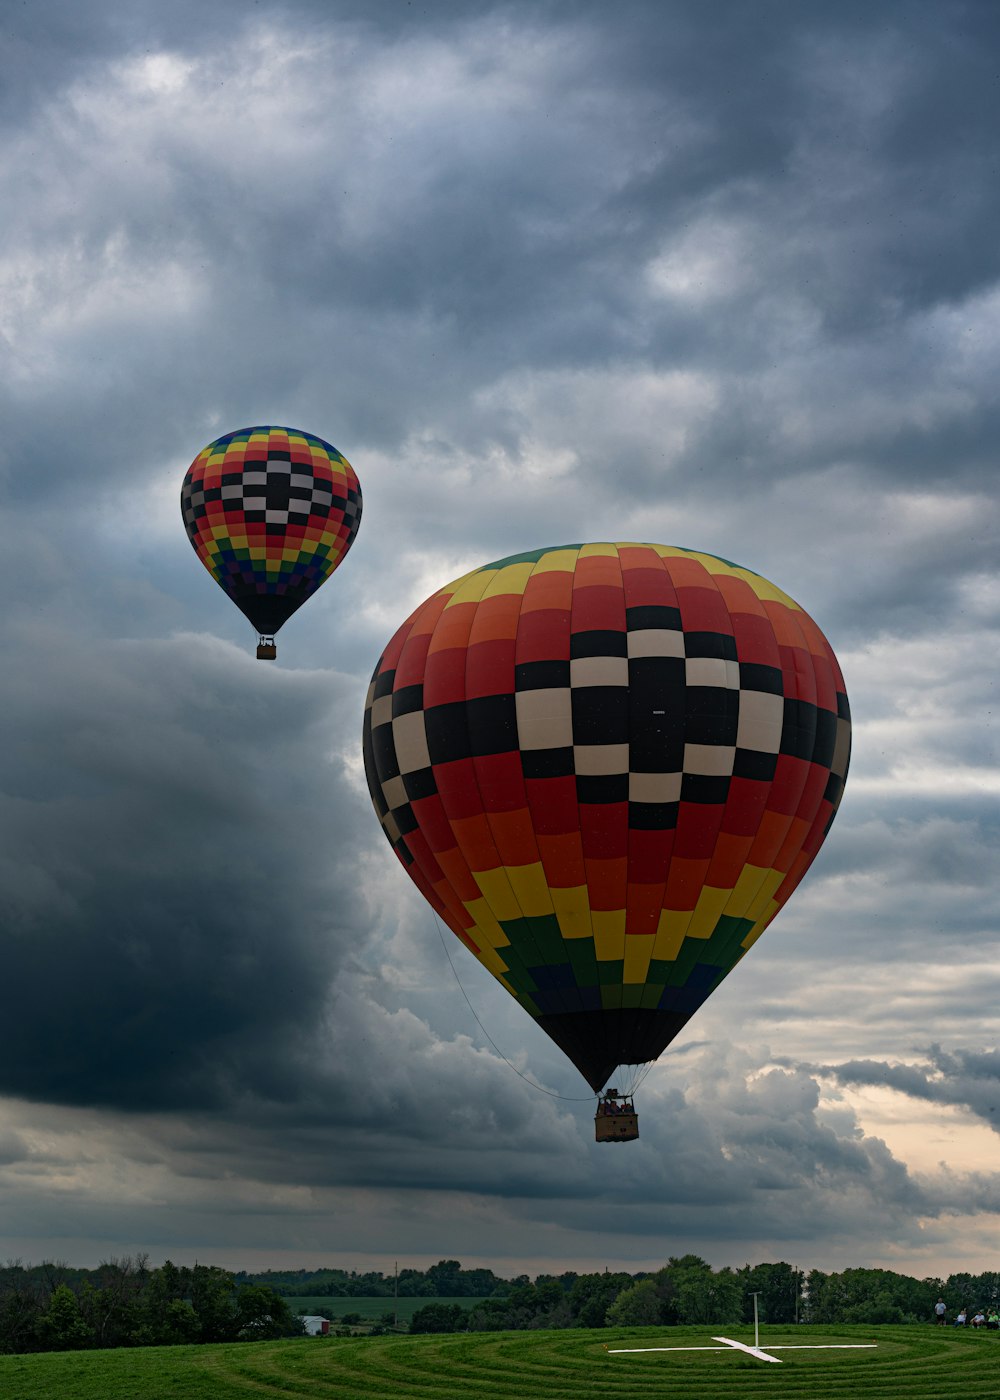 a couple of hot air balloons flying through a cloudy sky